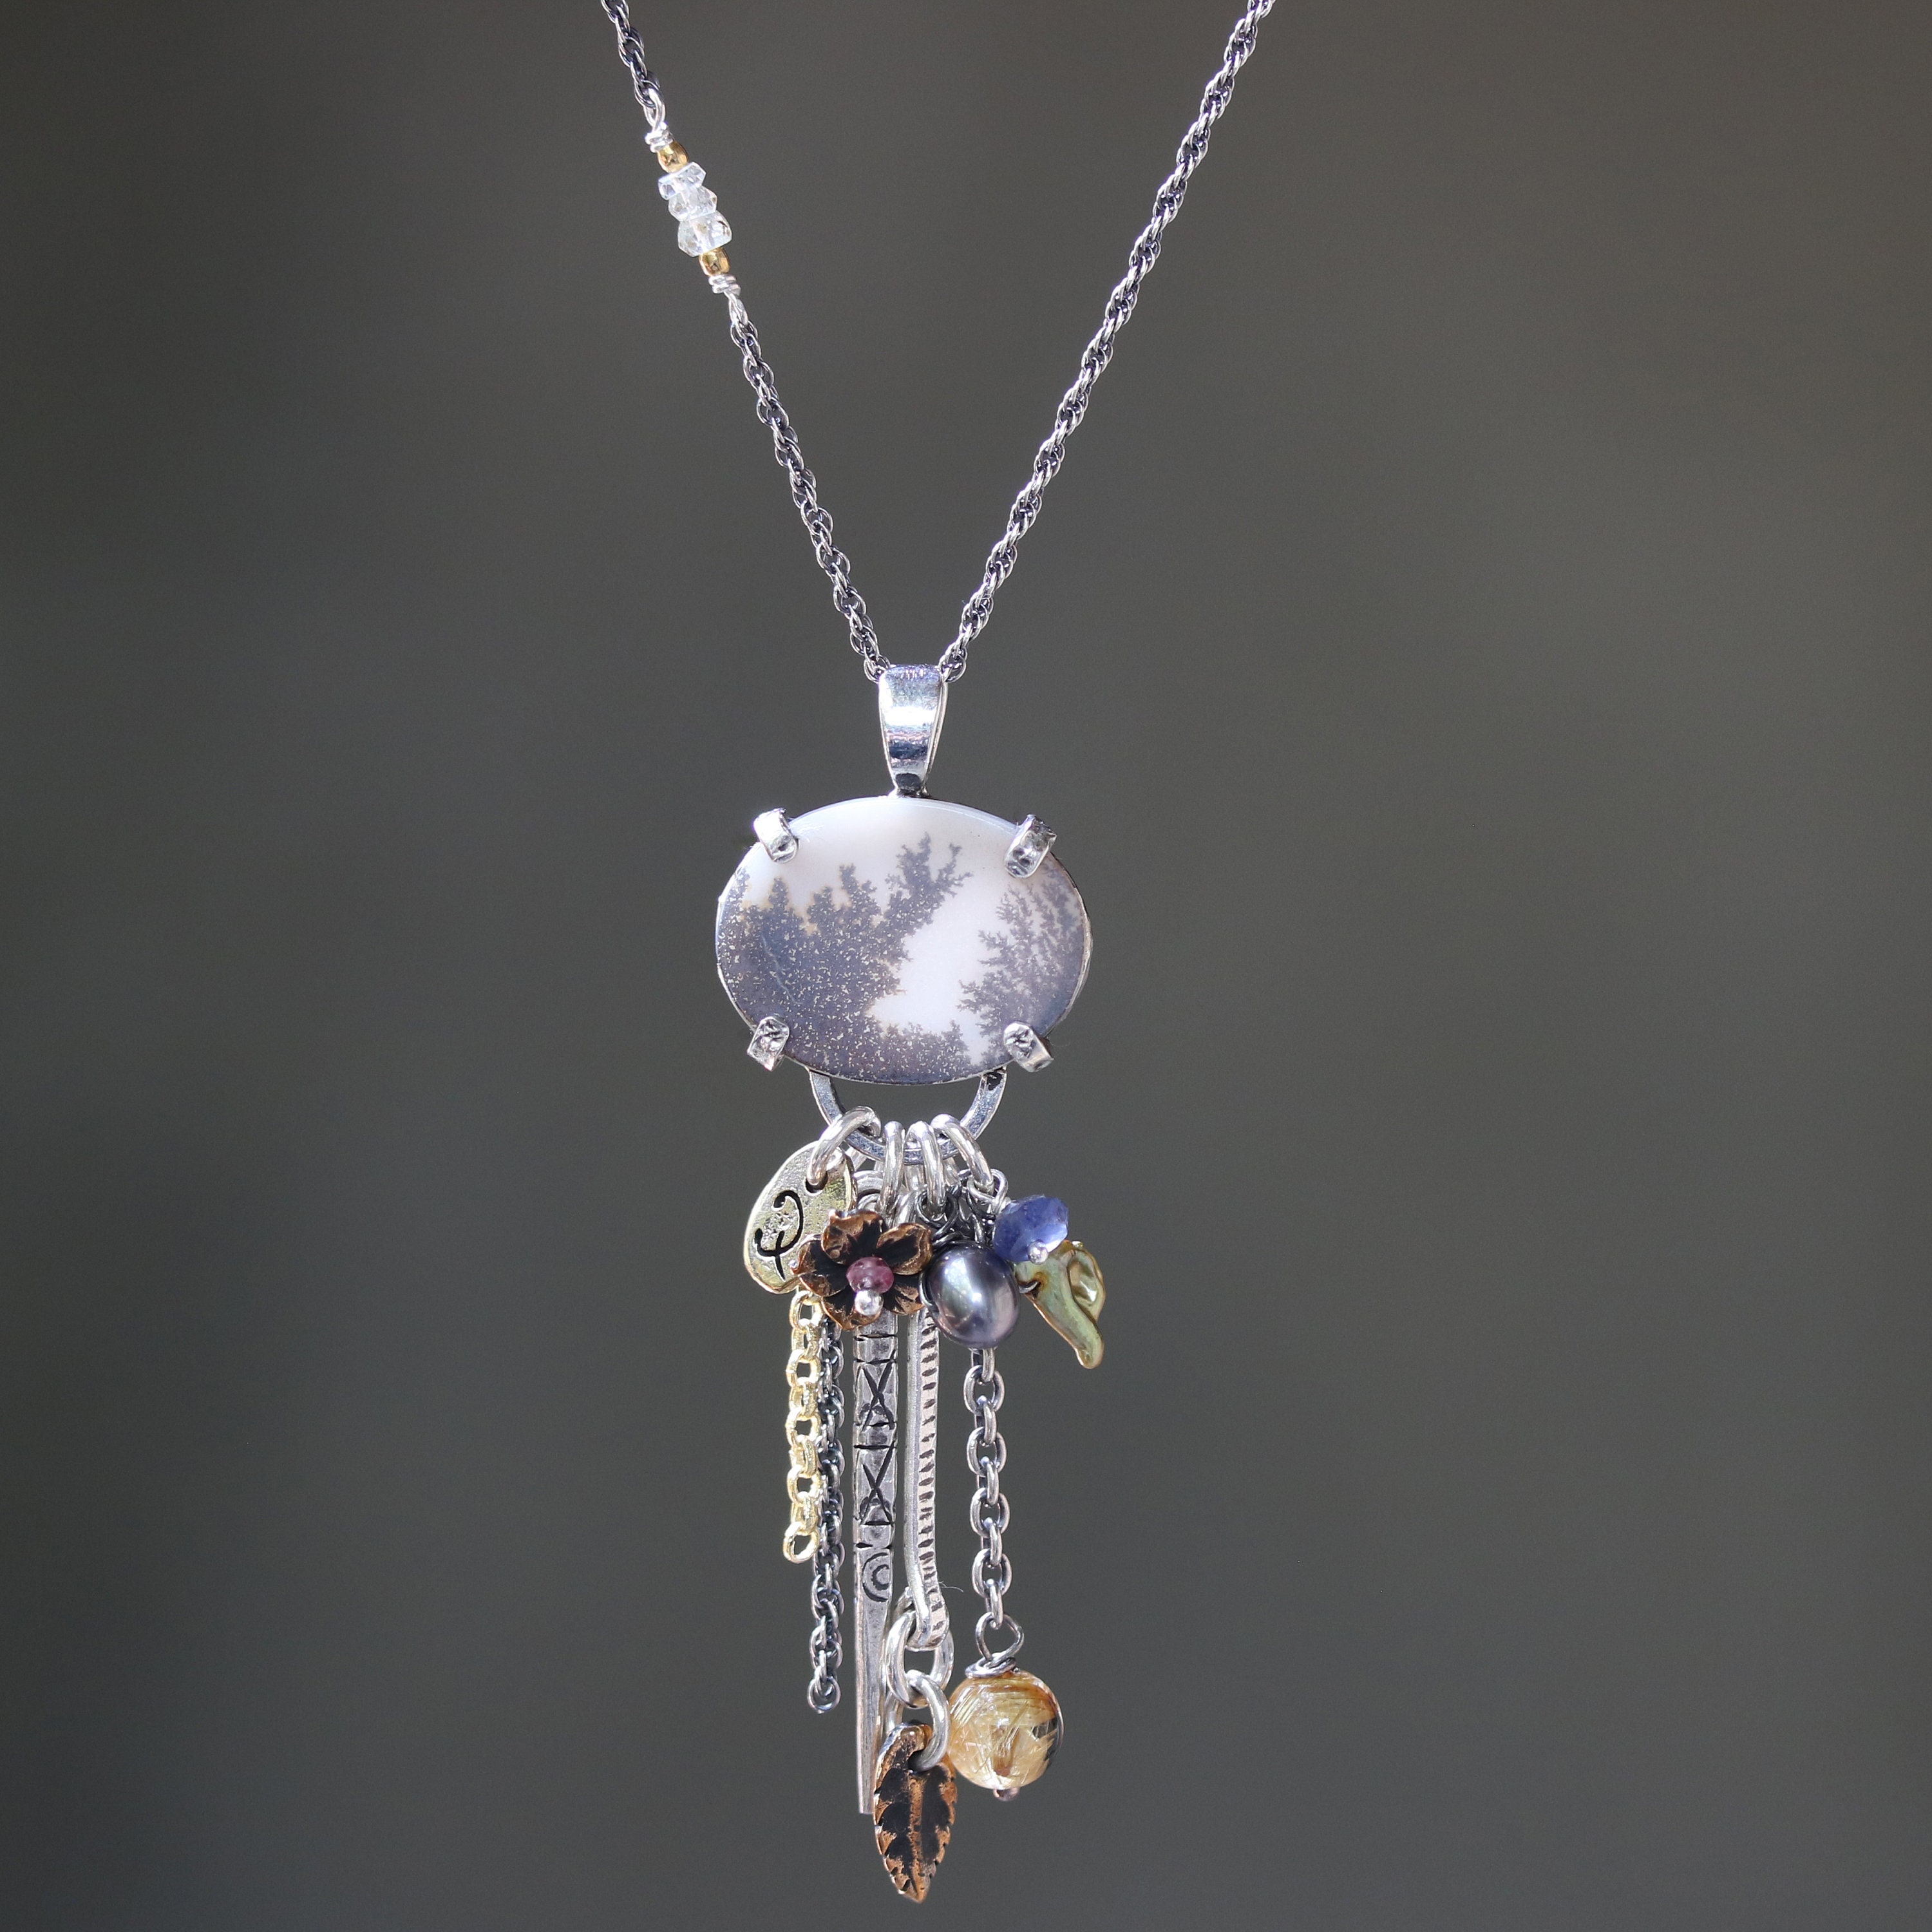 The jungle in oval dendritic quartz pendant necklace in | Etsy